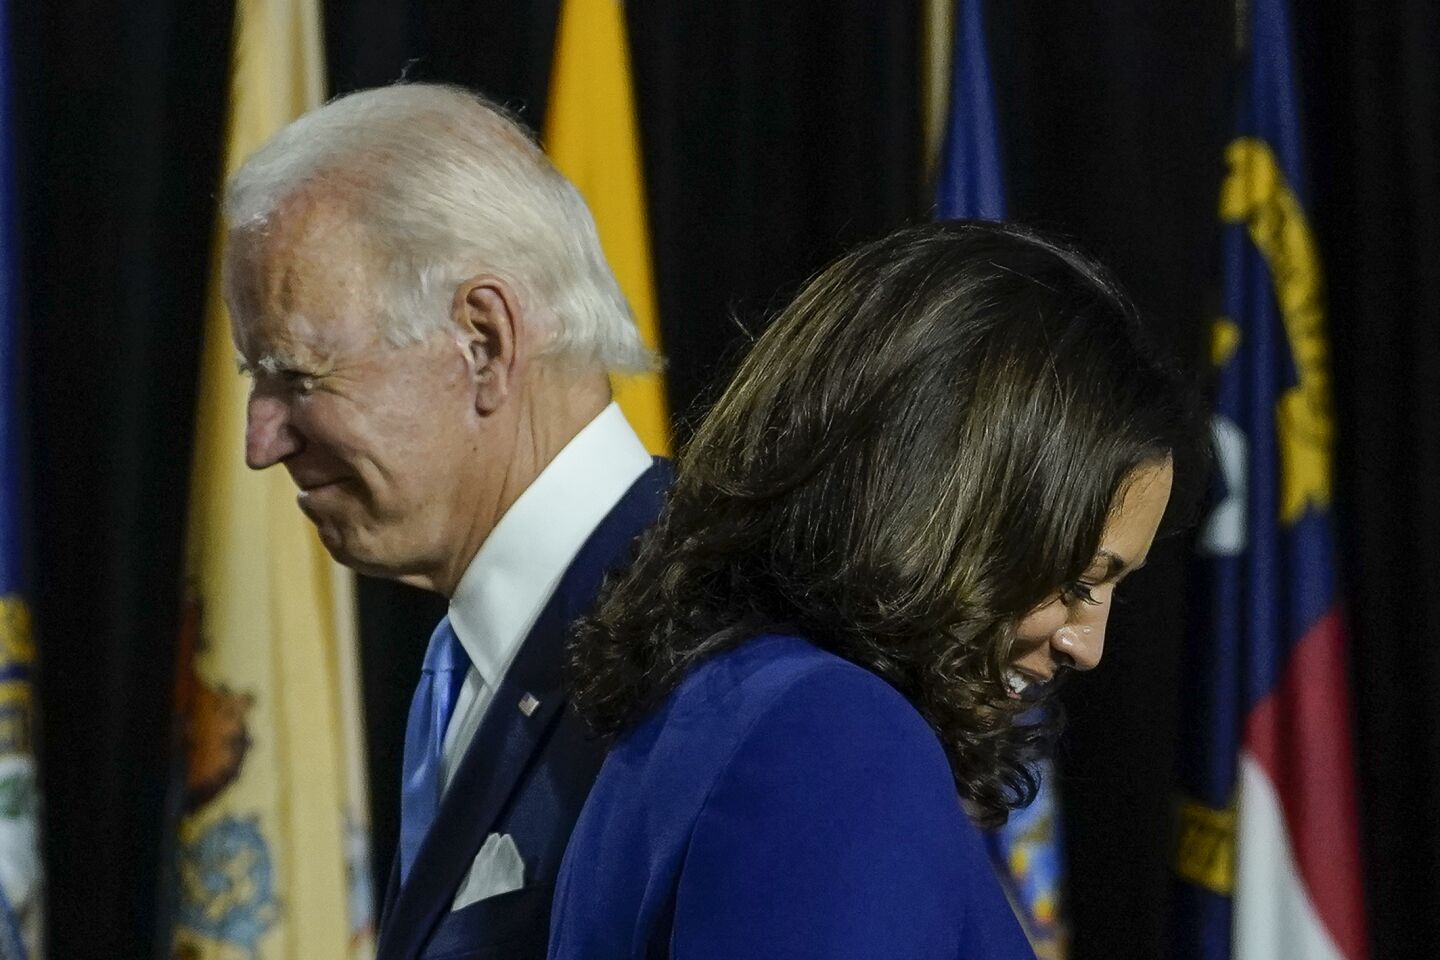 Joe Biden introduces Kamala Harris as his running mate in Wilmington, Del.